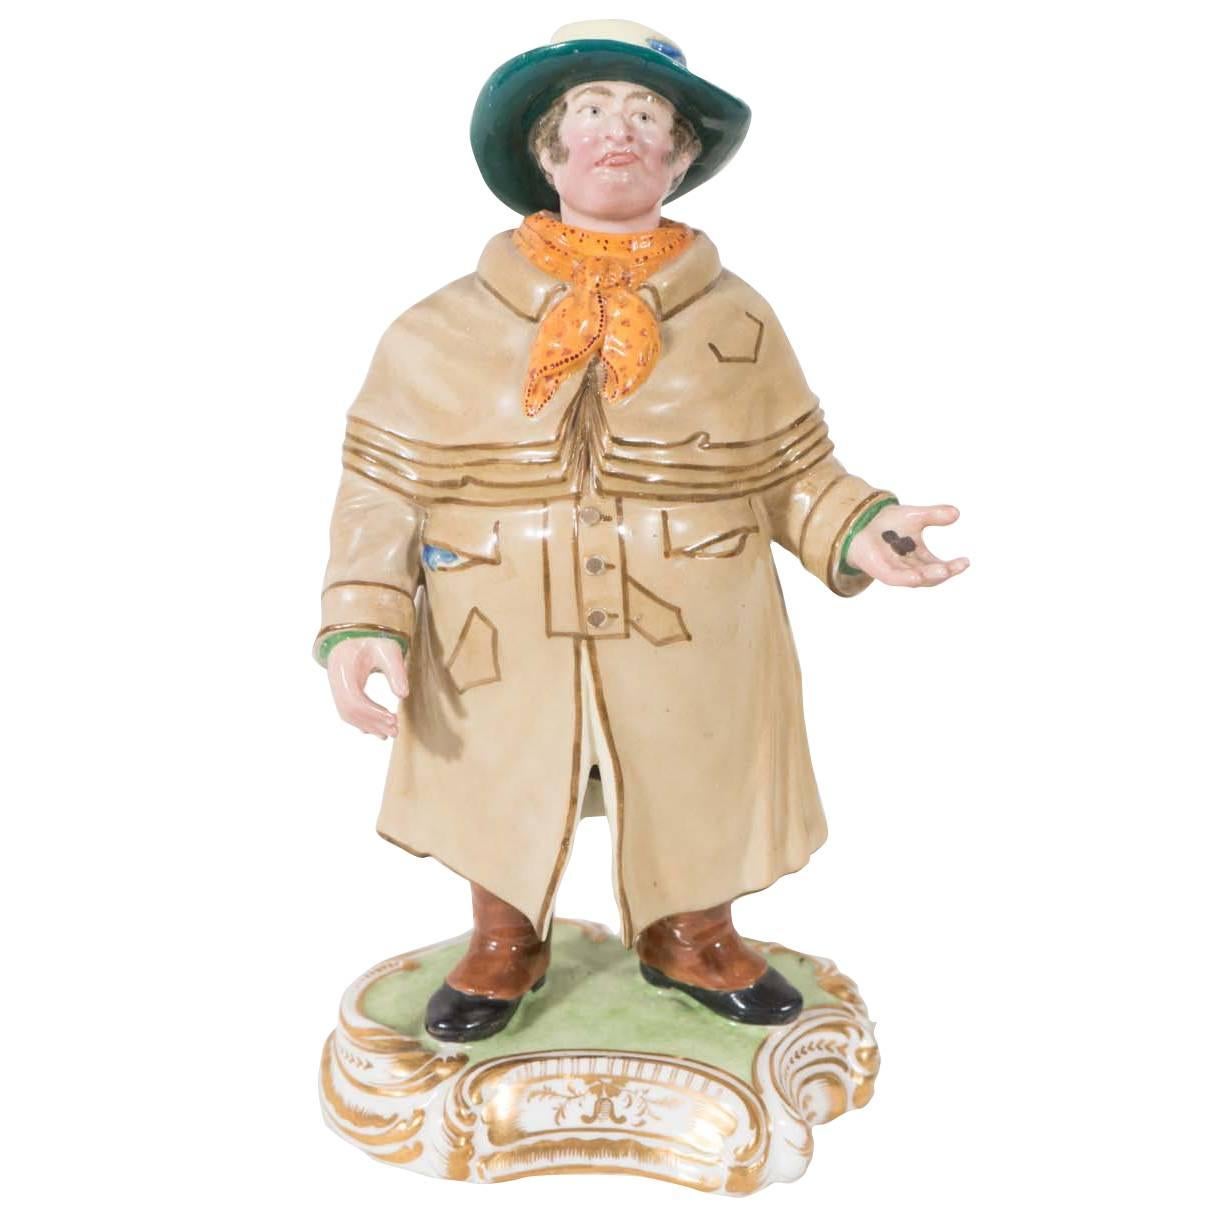 Nodding Head Figurine of Victorian Coachman IN STOCK